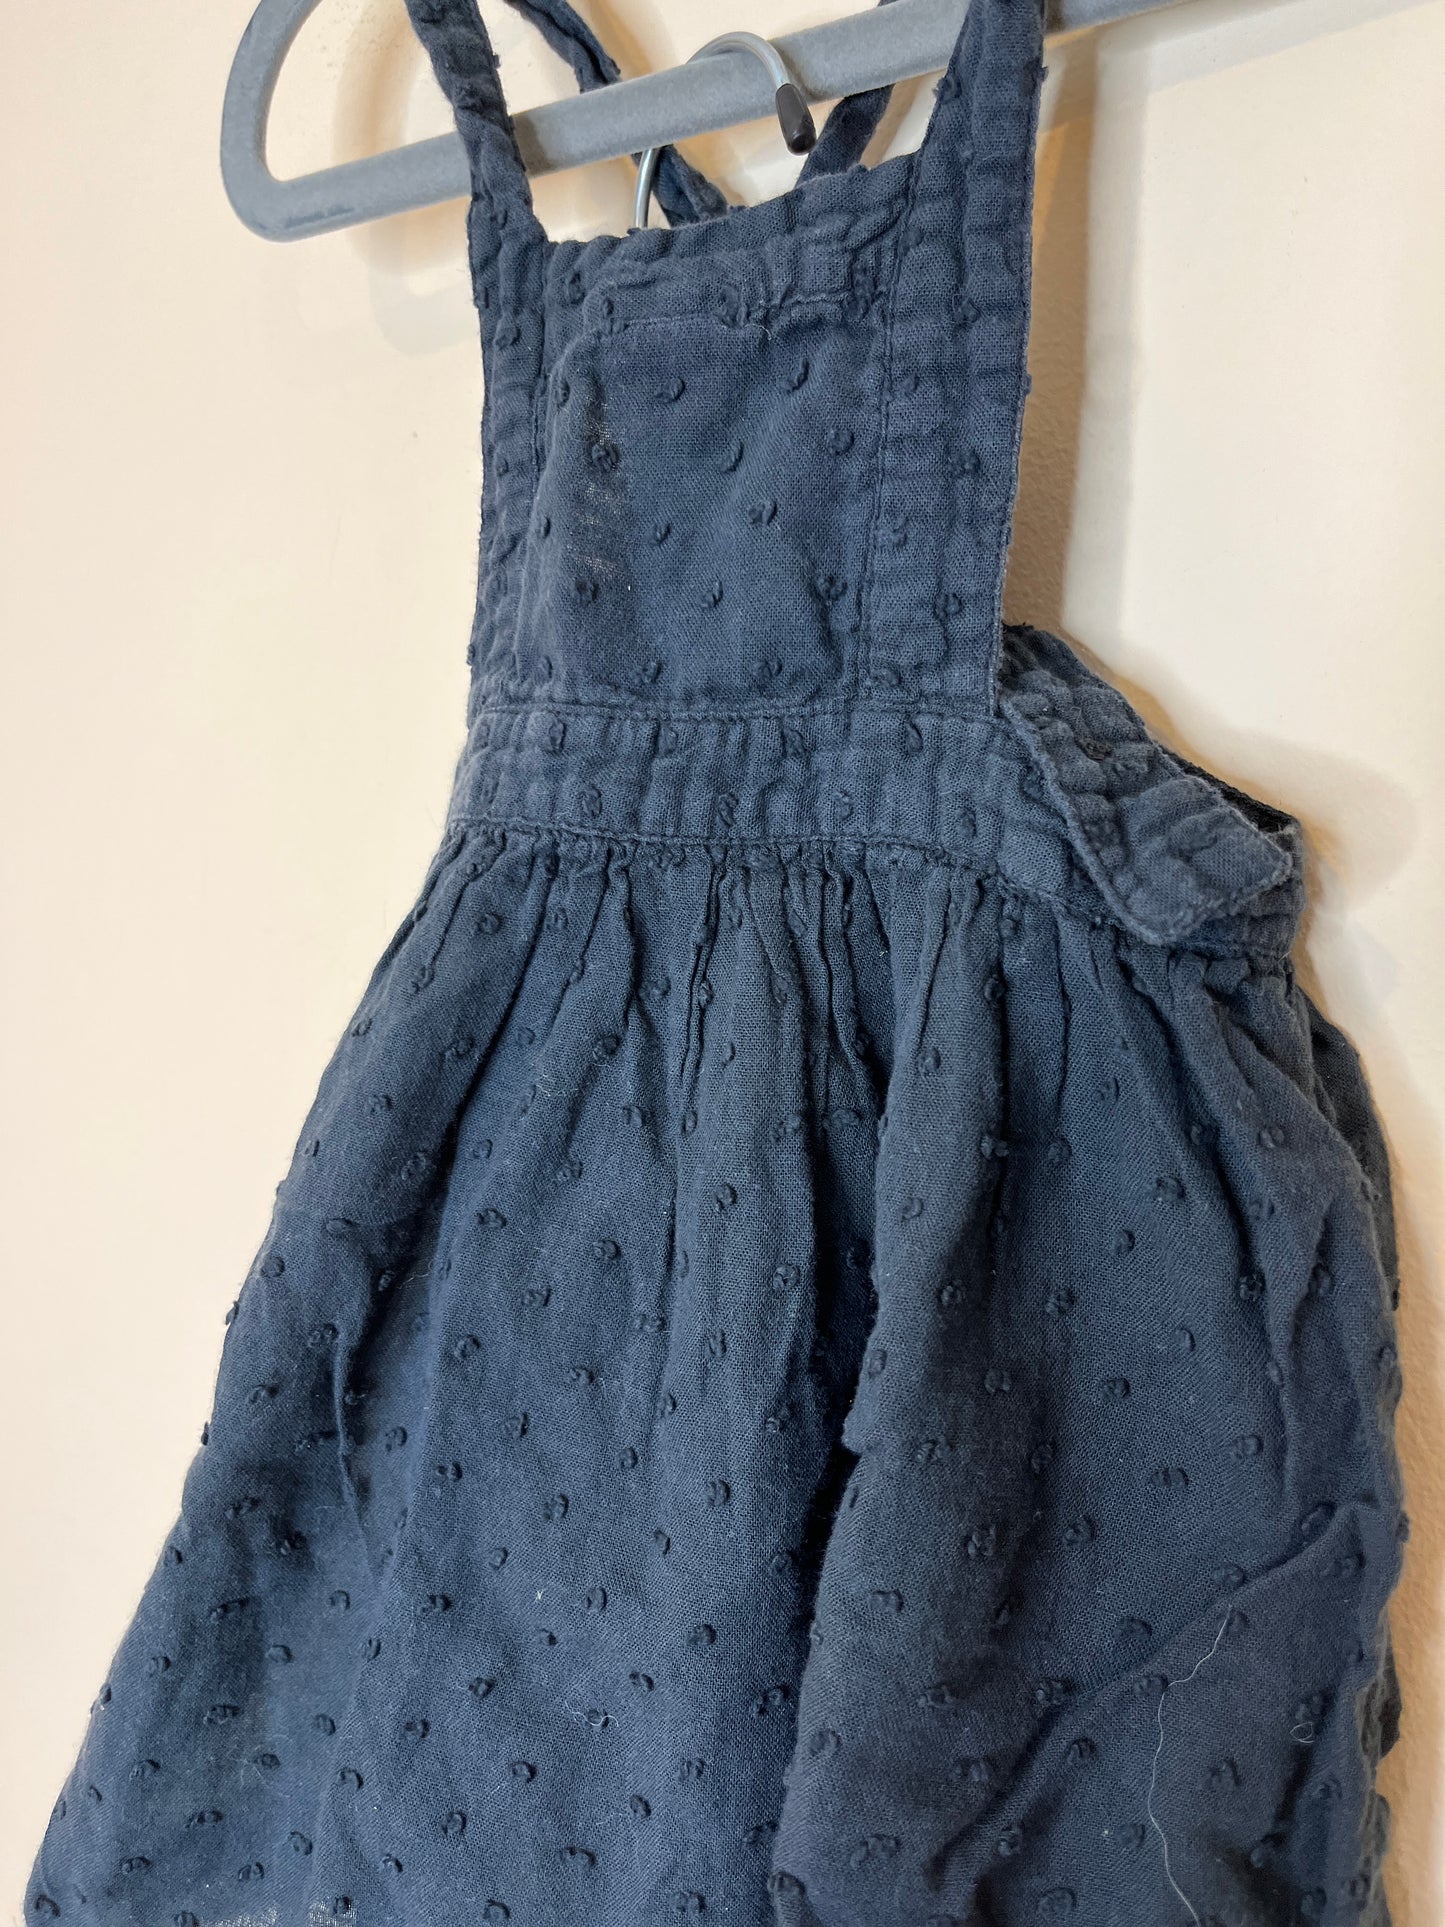 Bonton Textured Swiss Dot Pinafore Dress (12M)